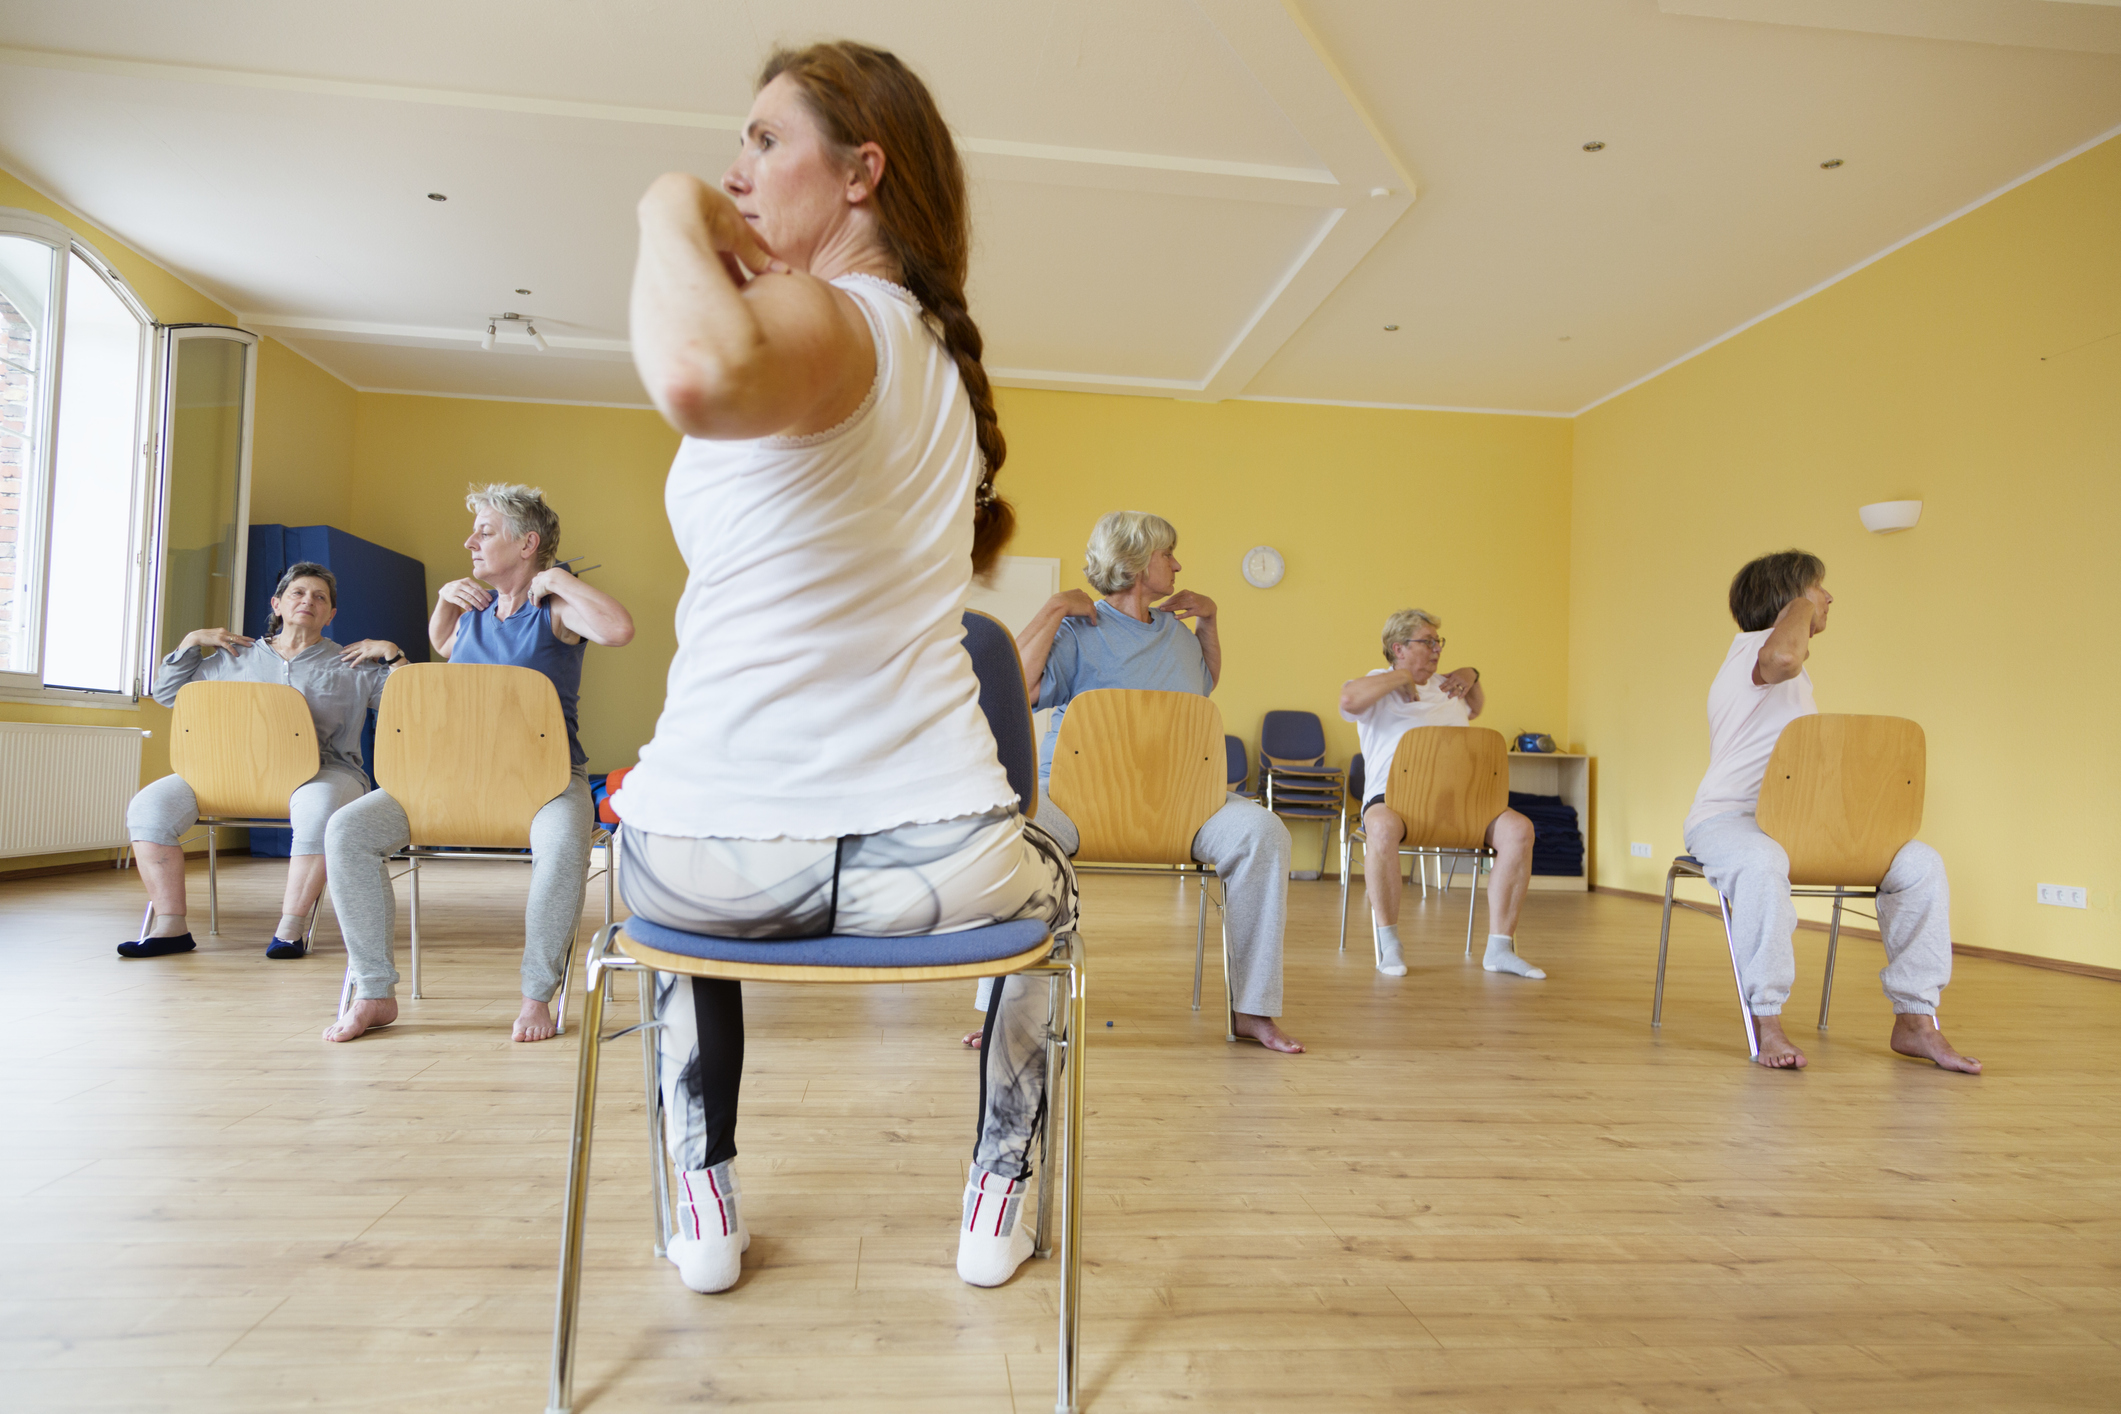 chair yoga for seniors can help you feel good